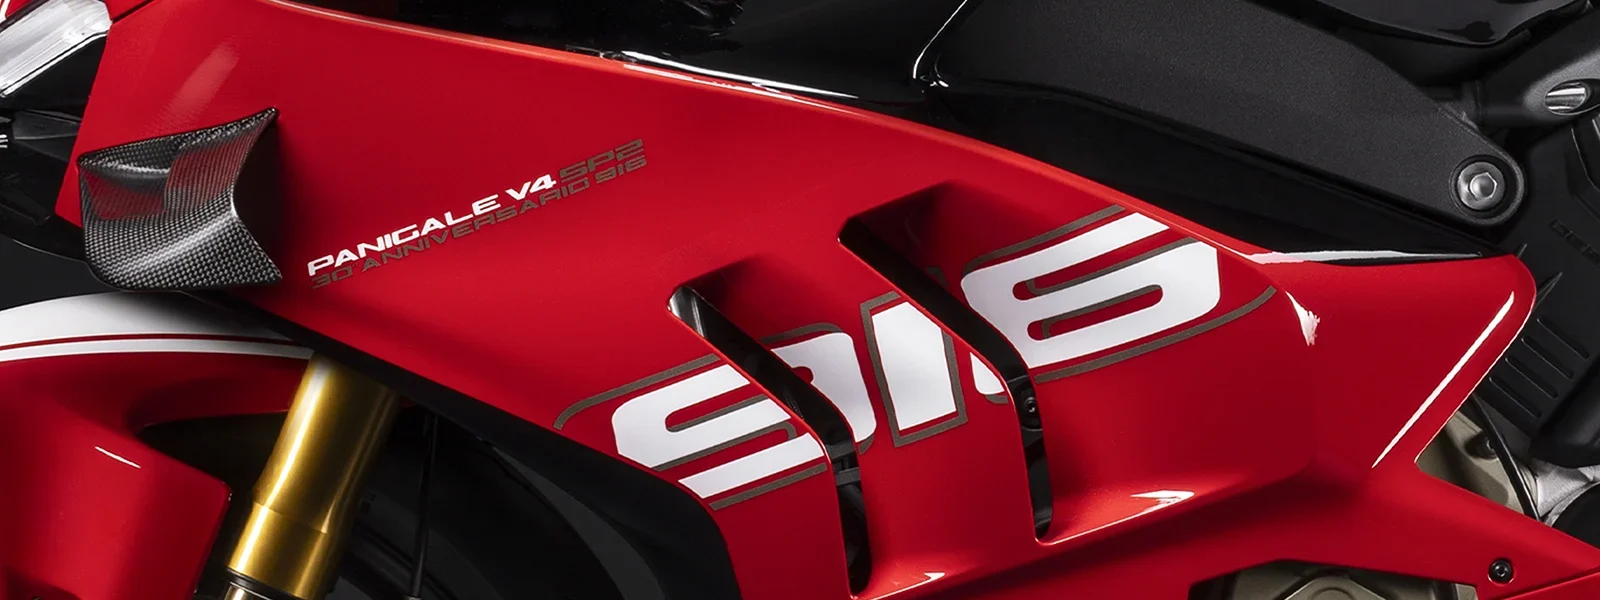 Ducati-Panigale-V4-SP2-30-anniversario-916-DWP24-Overview-hero-short-1600x1000-01